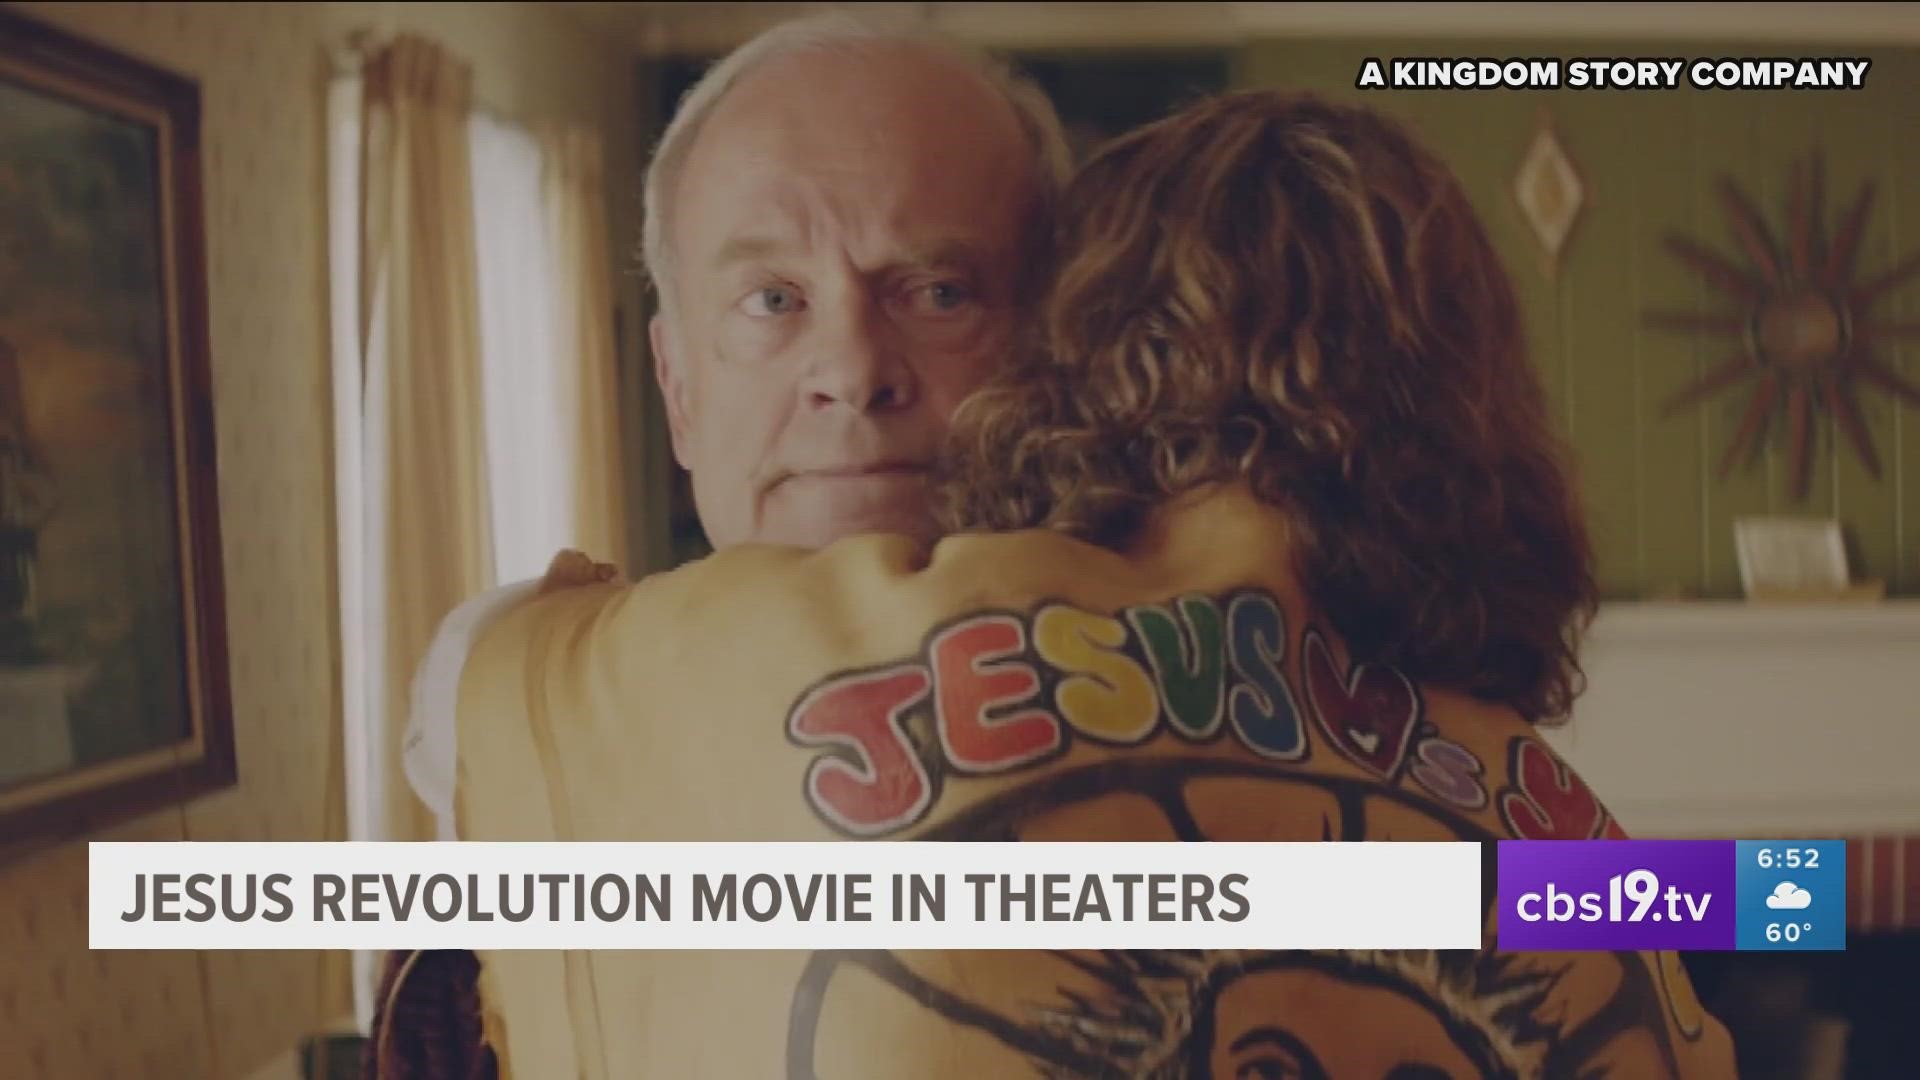 Jesus Revolution movie in theaters now